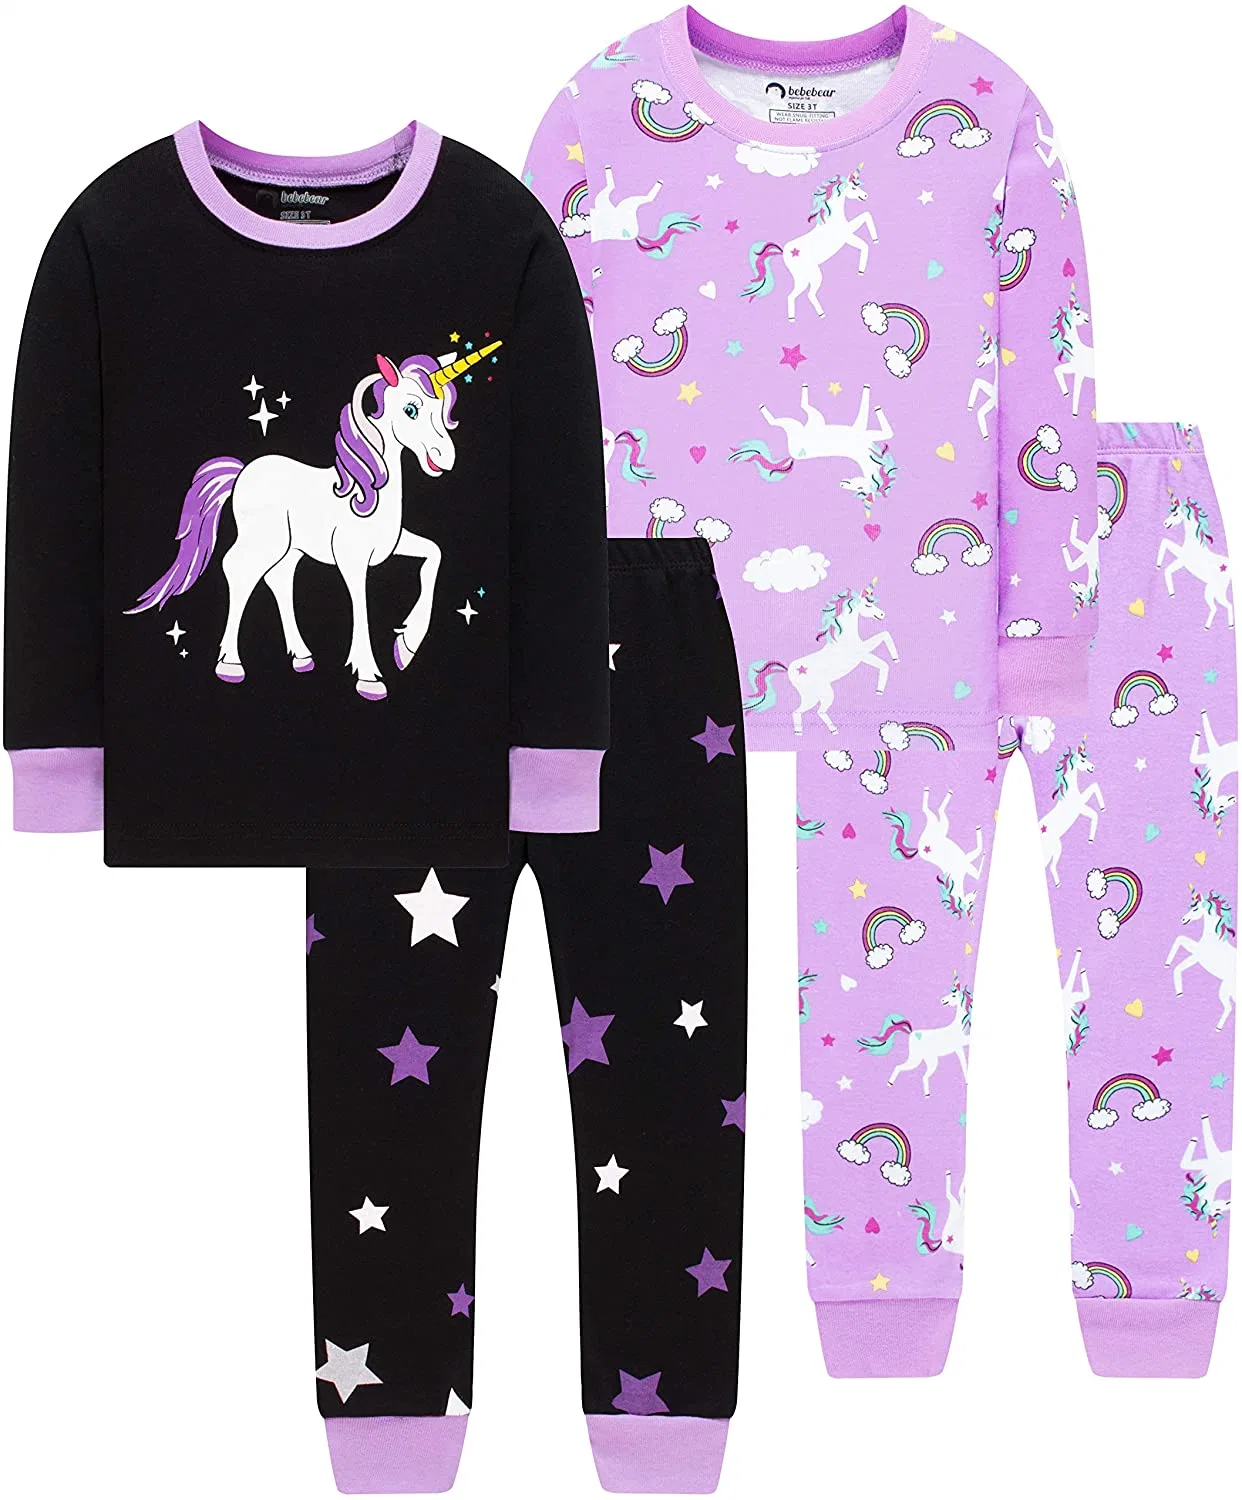 Girls Christmas Pajamas Baby Kids Horse Clothes Children Unicorn Gift Pants